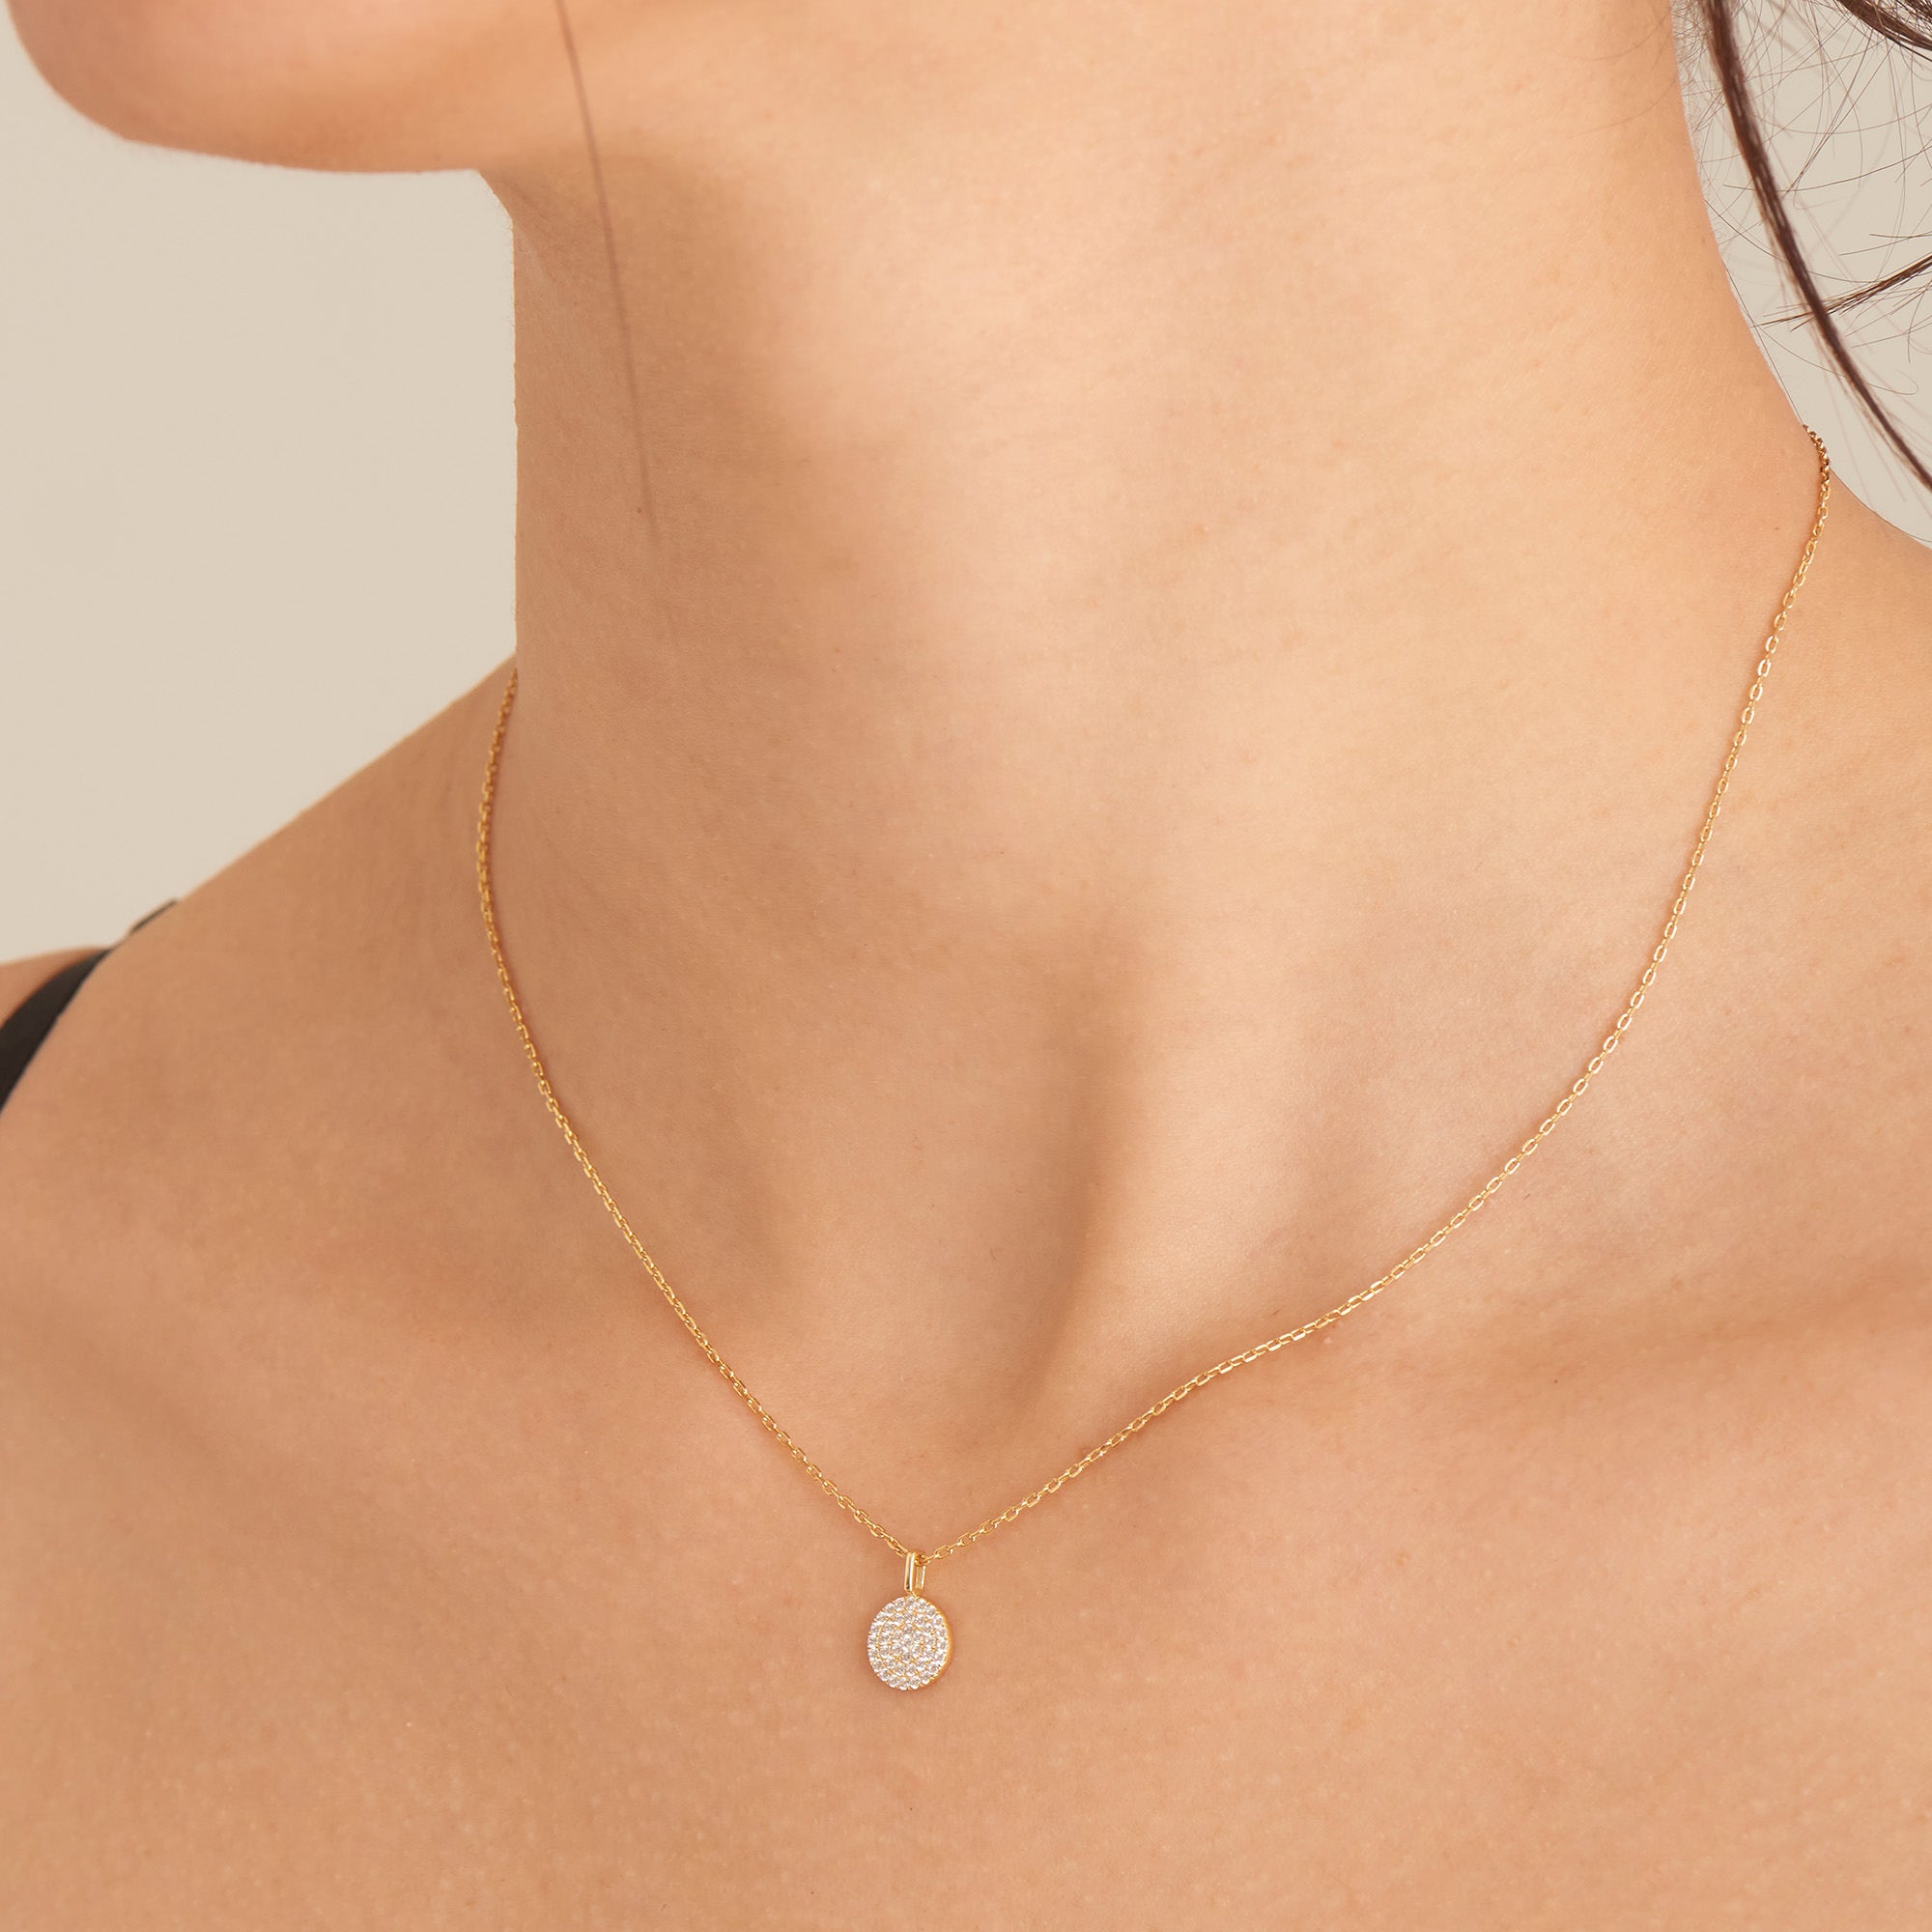 Gold Vermeil Ania Haie Glam Disc Pendant Necklace